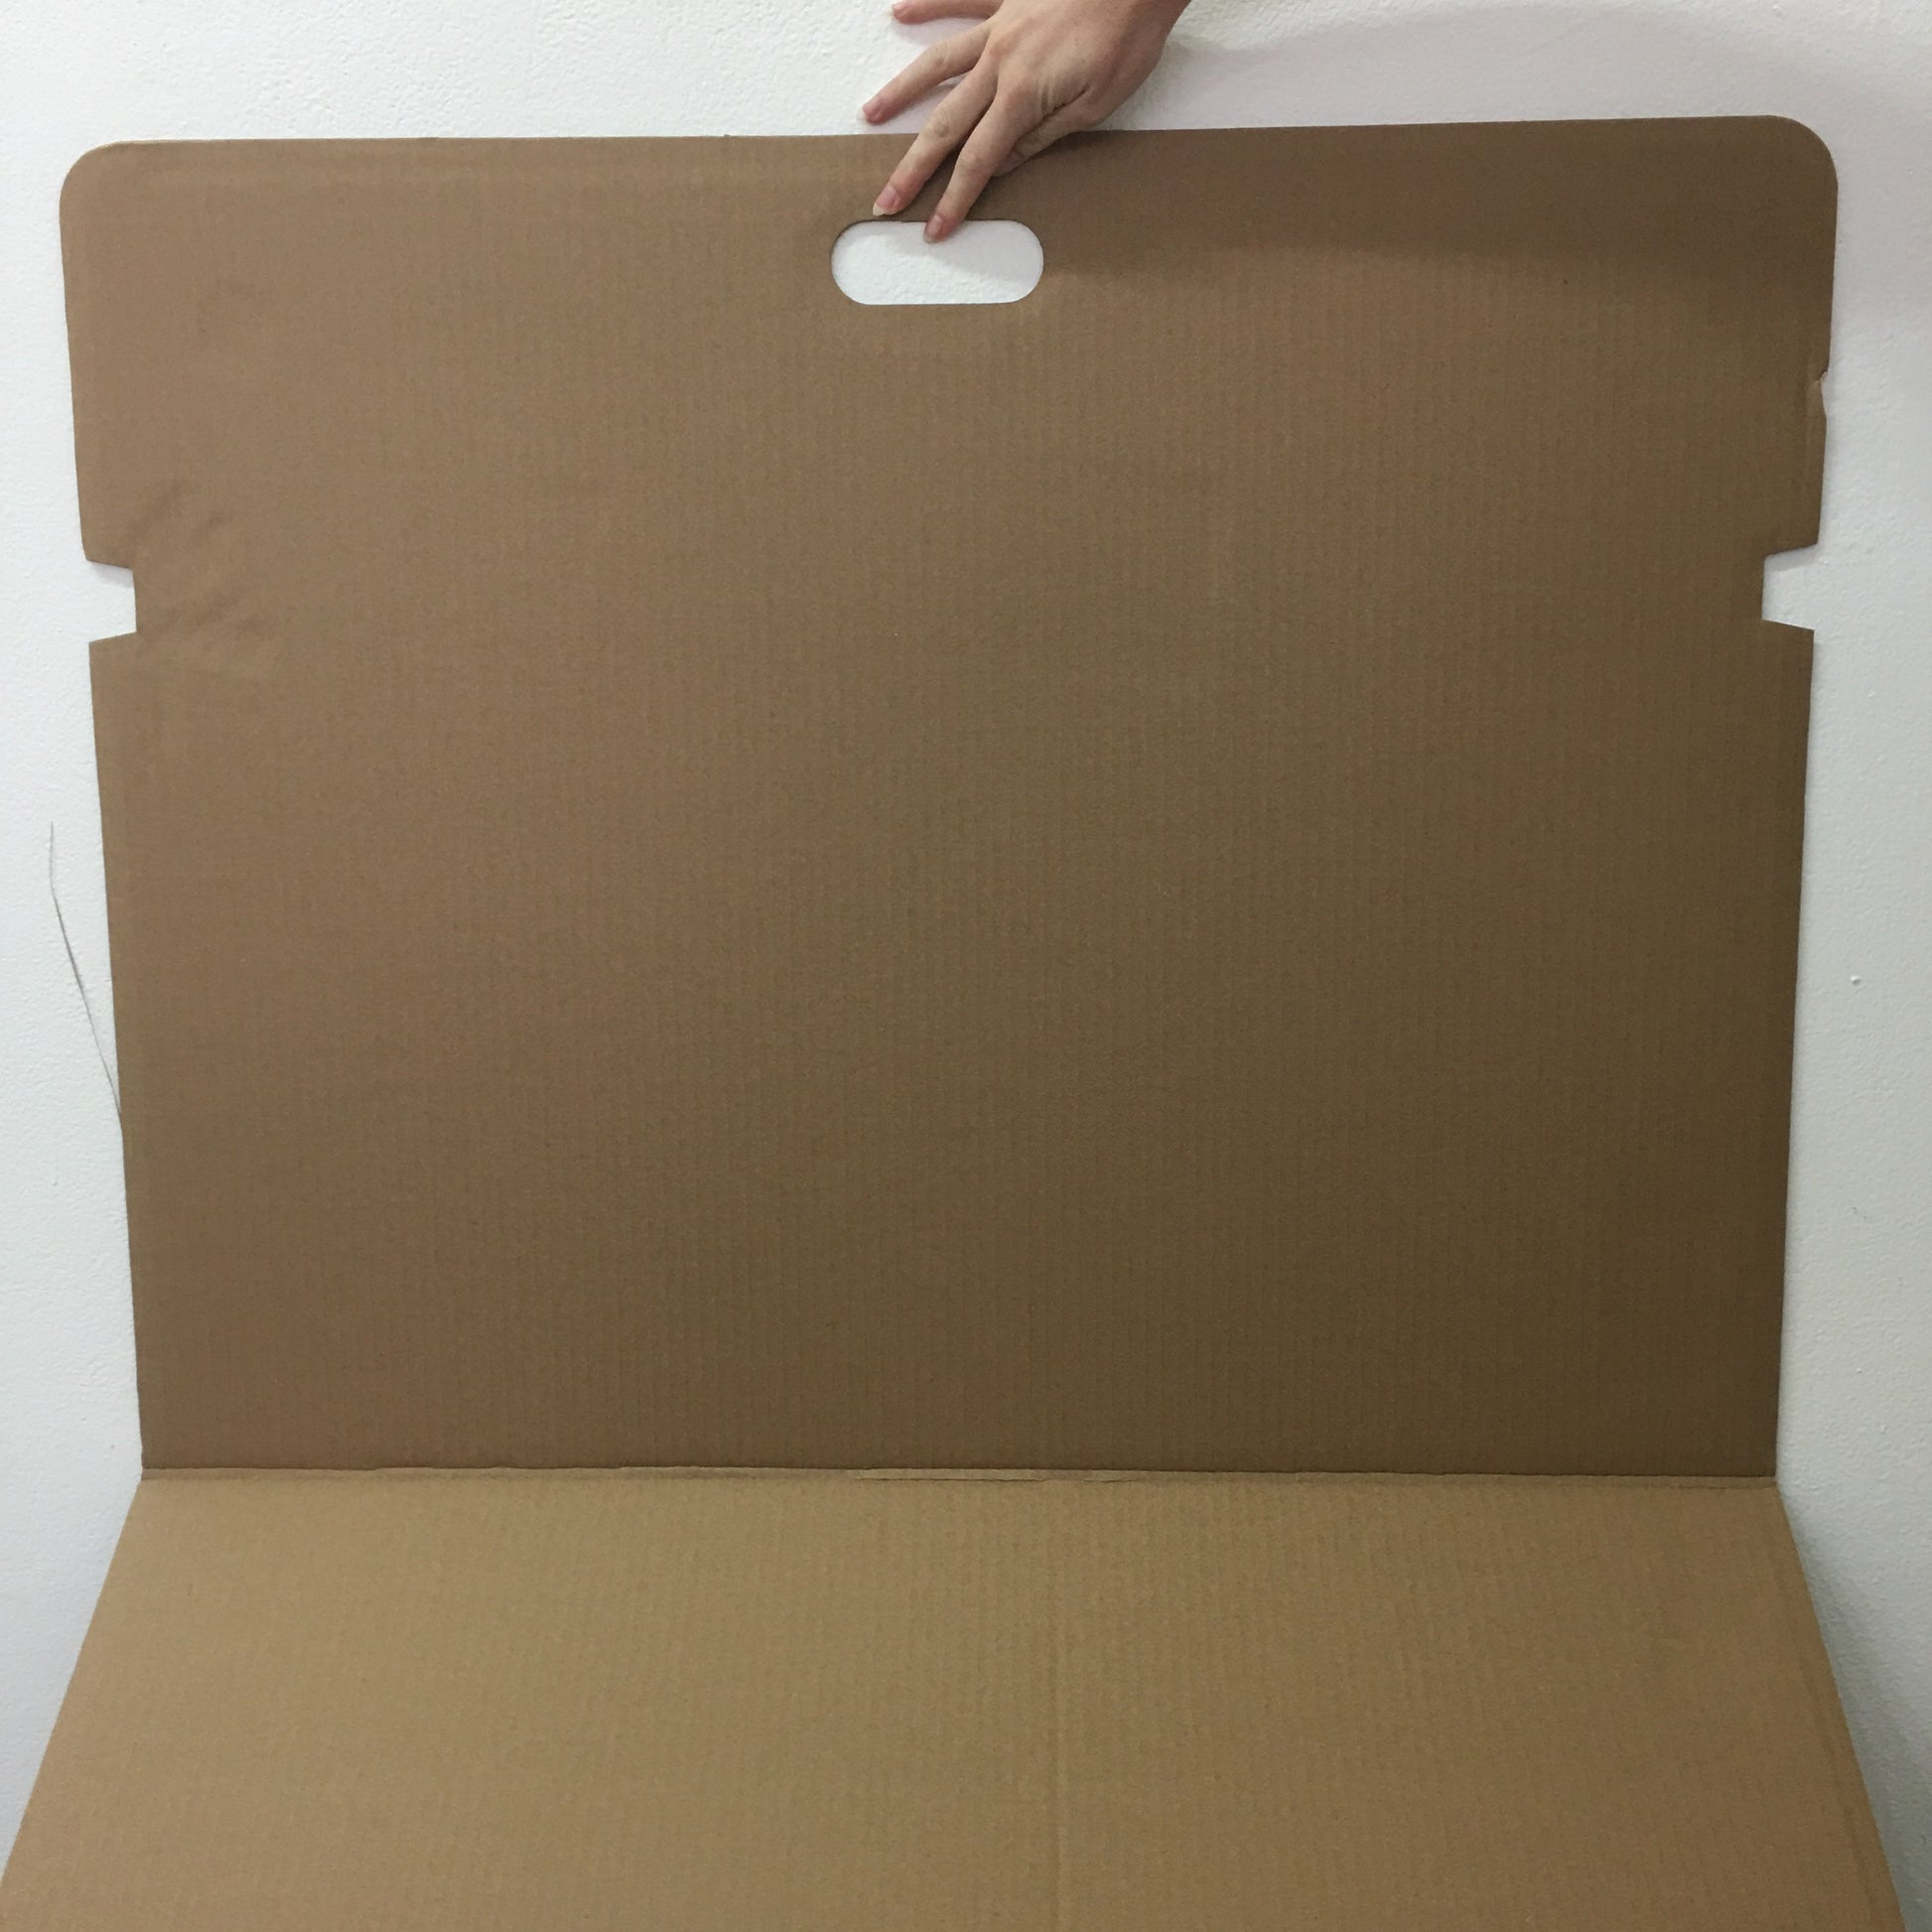 Art Alternatives Cardboard Portfolio - 33 x 26 inches - by Art Alternatives - K. A. Artist Shop